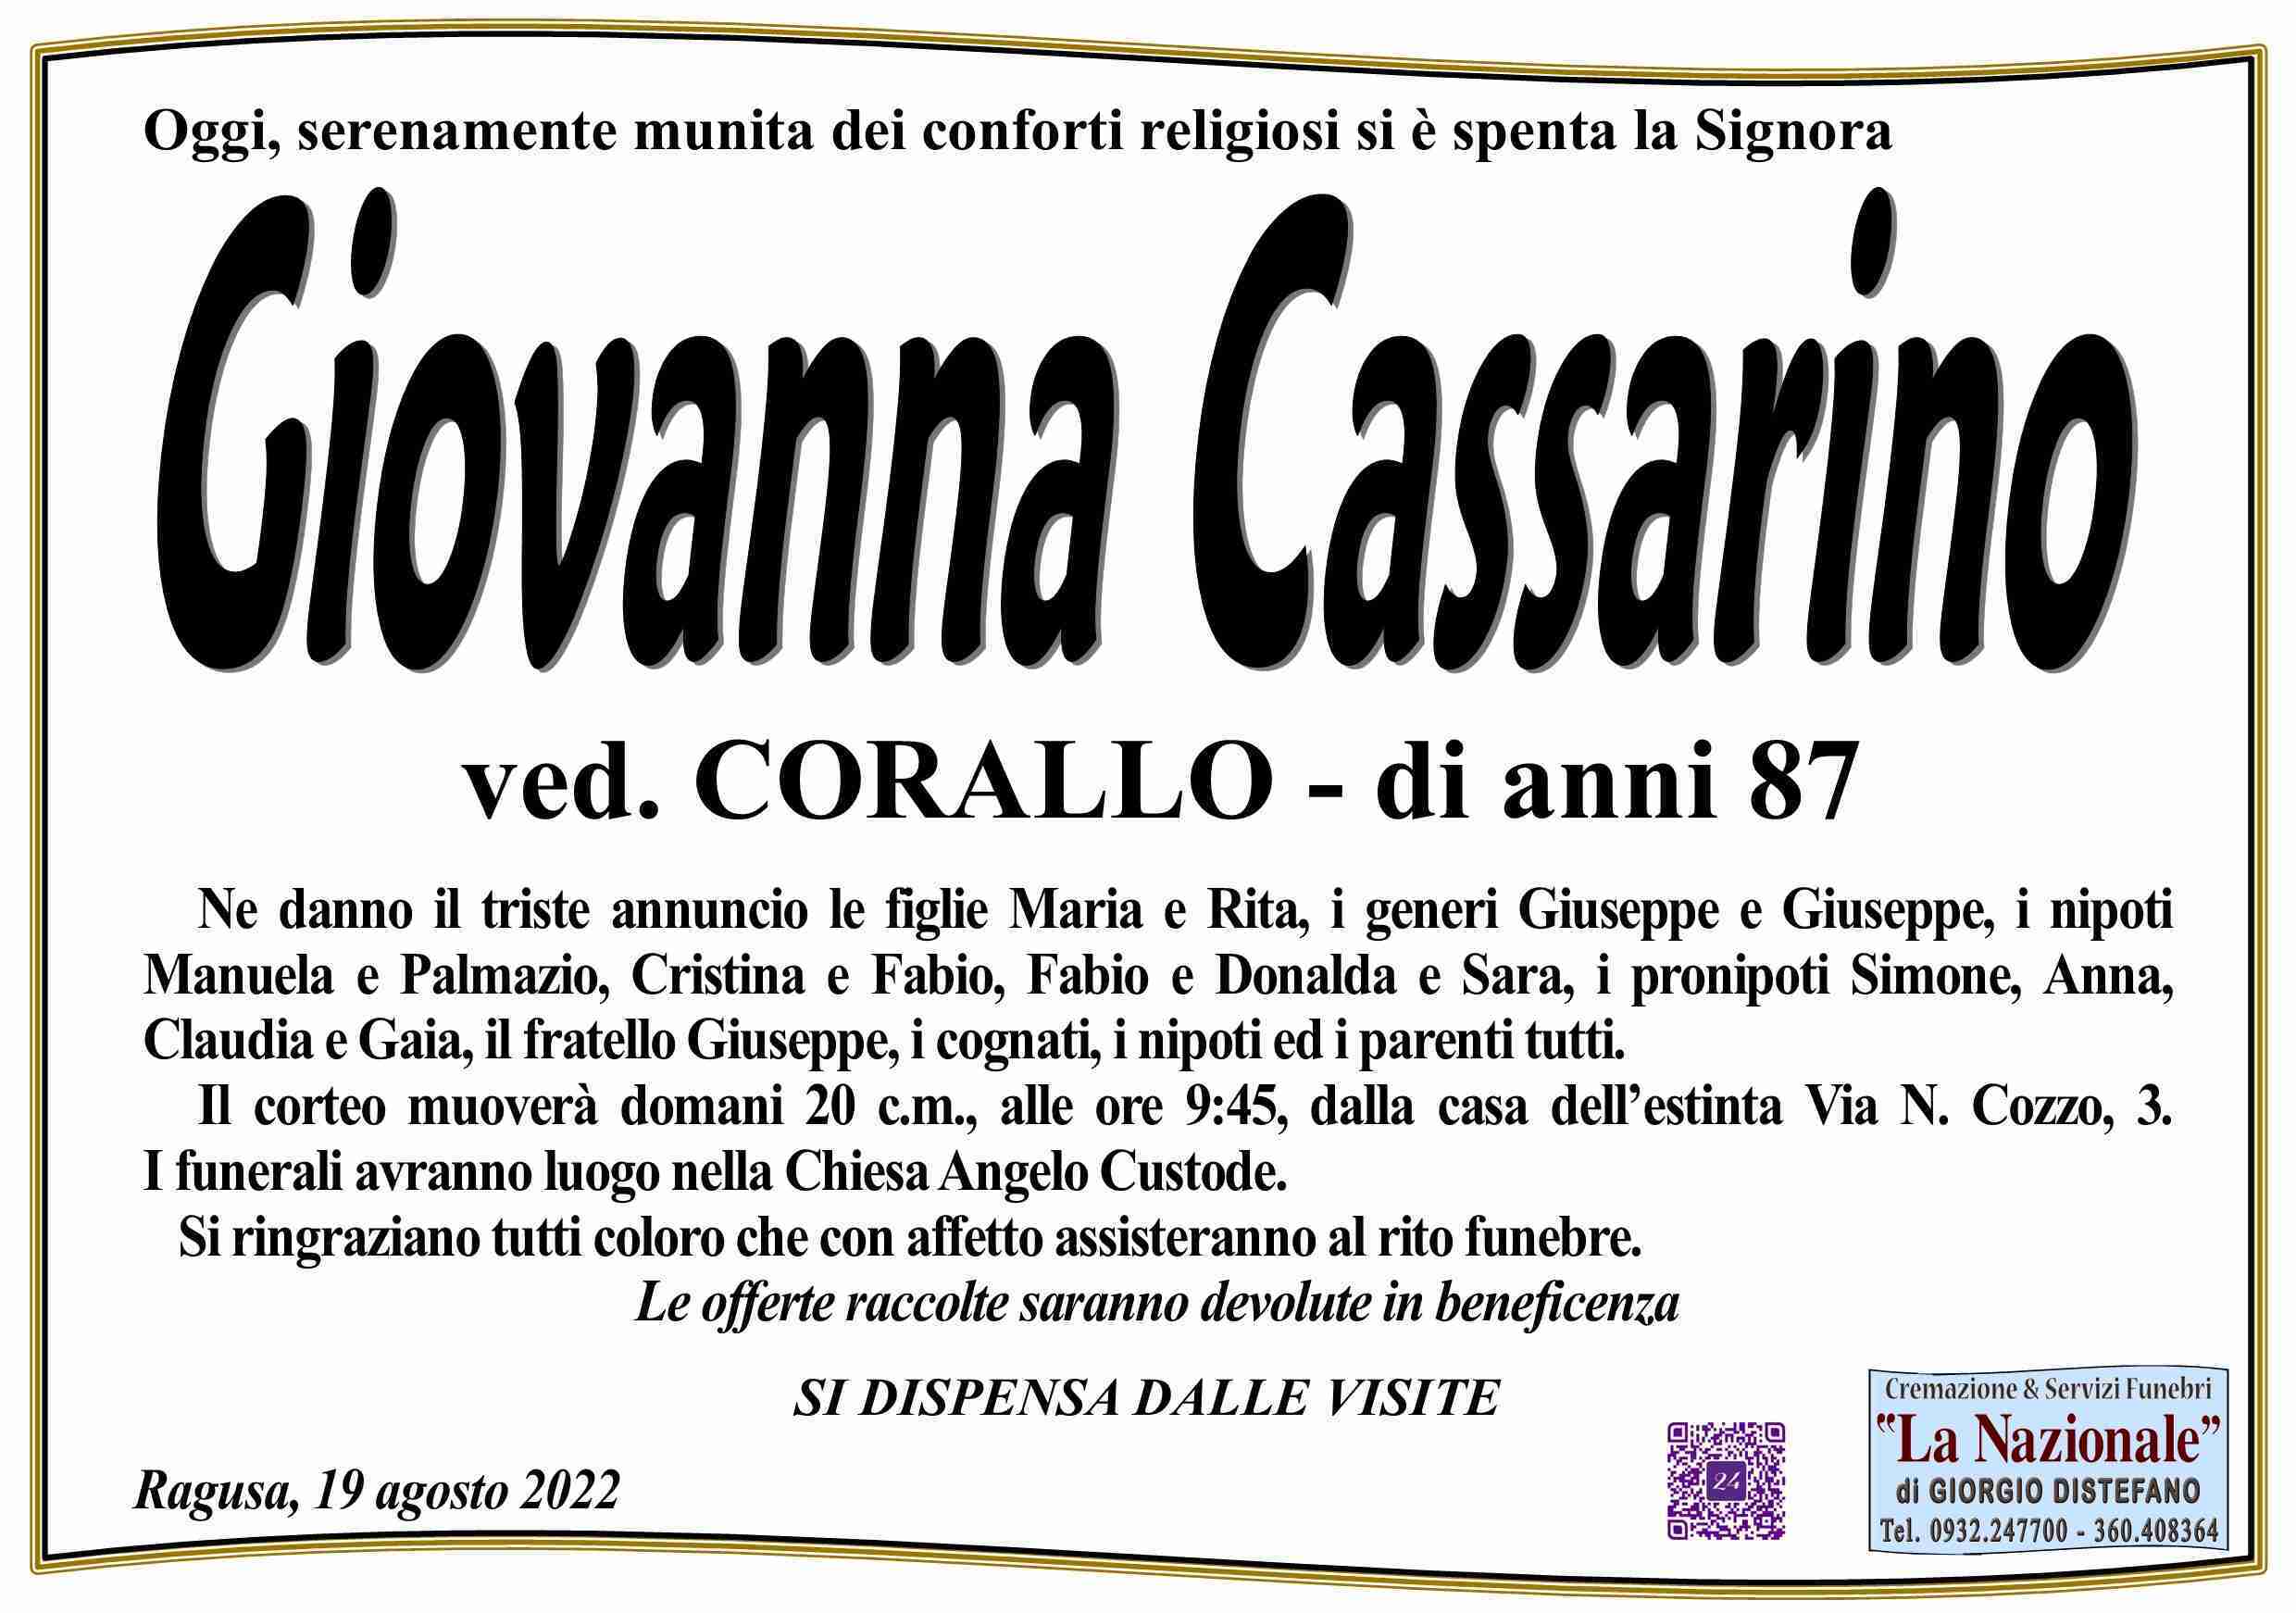 Giovanna Cassarino